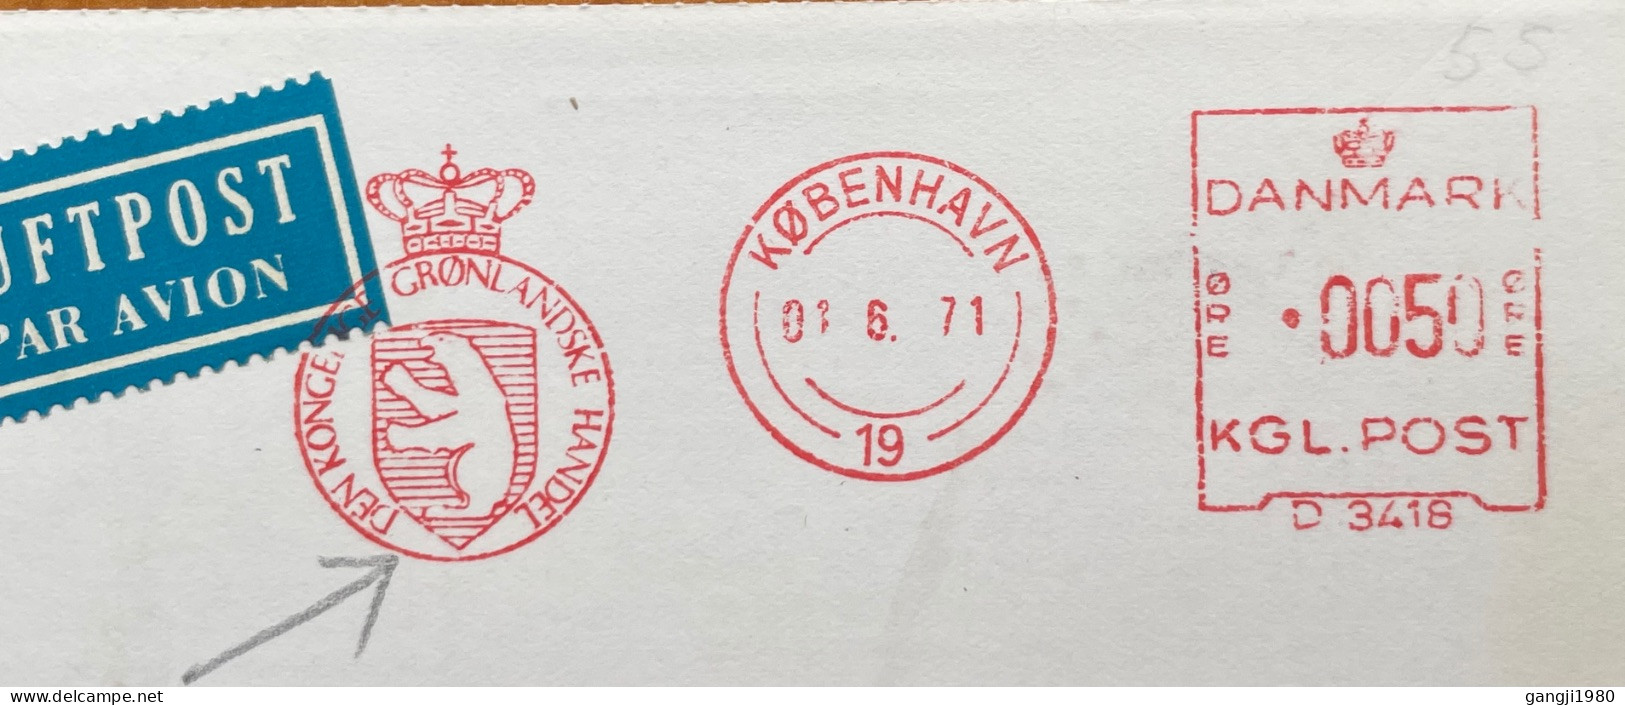 GREENLAND-DENMARK 1971, MACHINE SLOGAN, BEAR ANIMAL, METER SLOGAN ON PHILATELIC INFORMATION CARD, USED TO USA. - Storia Postale